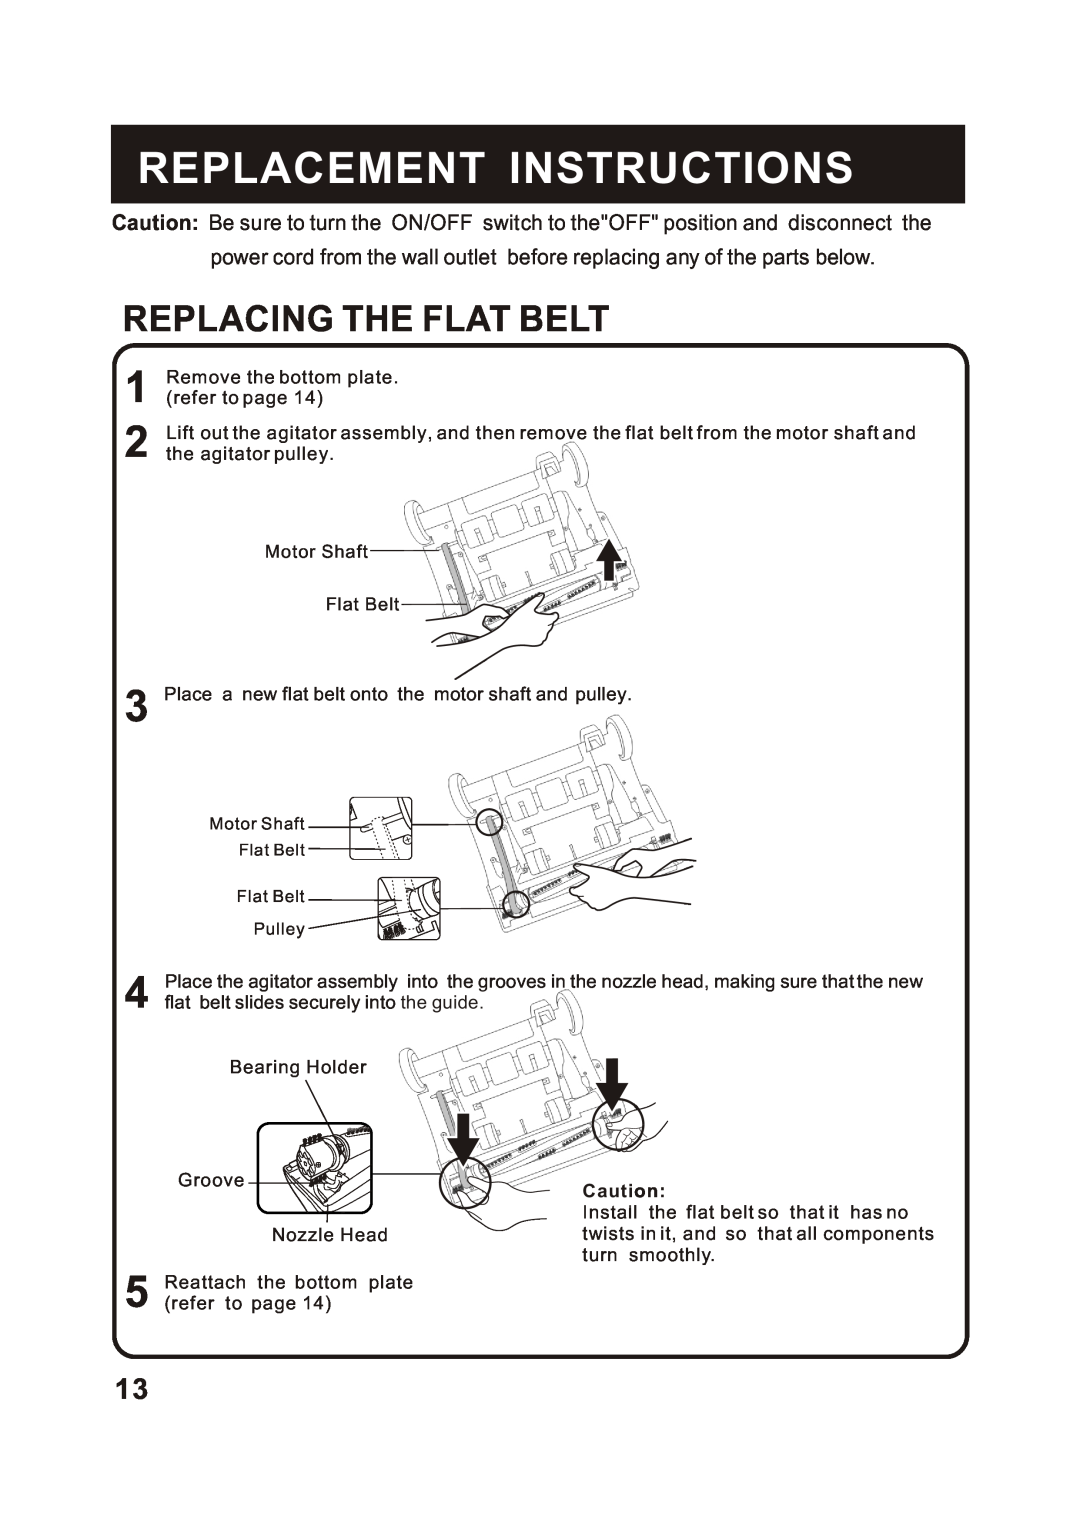 Fantom Vacuum FC285H instruction manual Replacement Instructions, Replacing The Flat Belt 